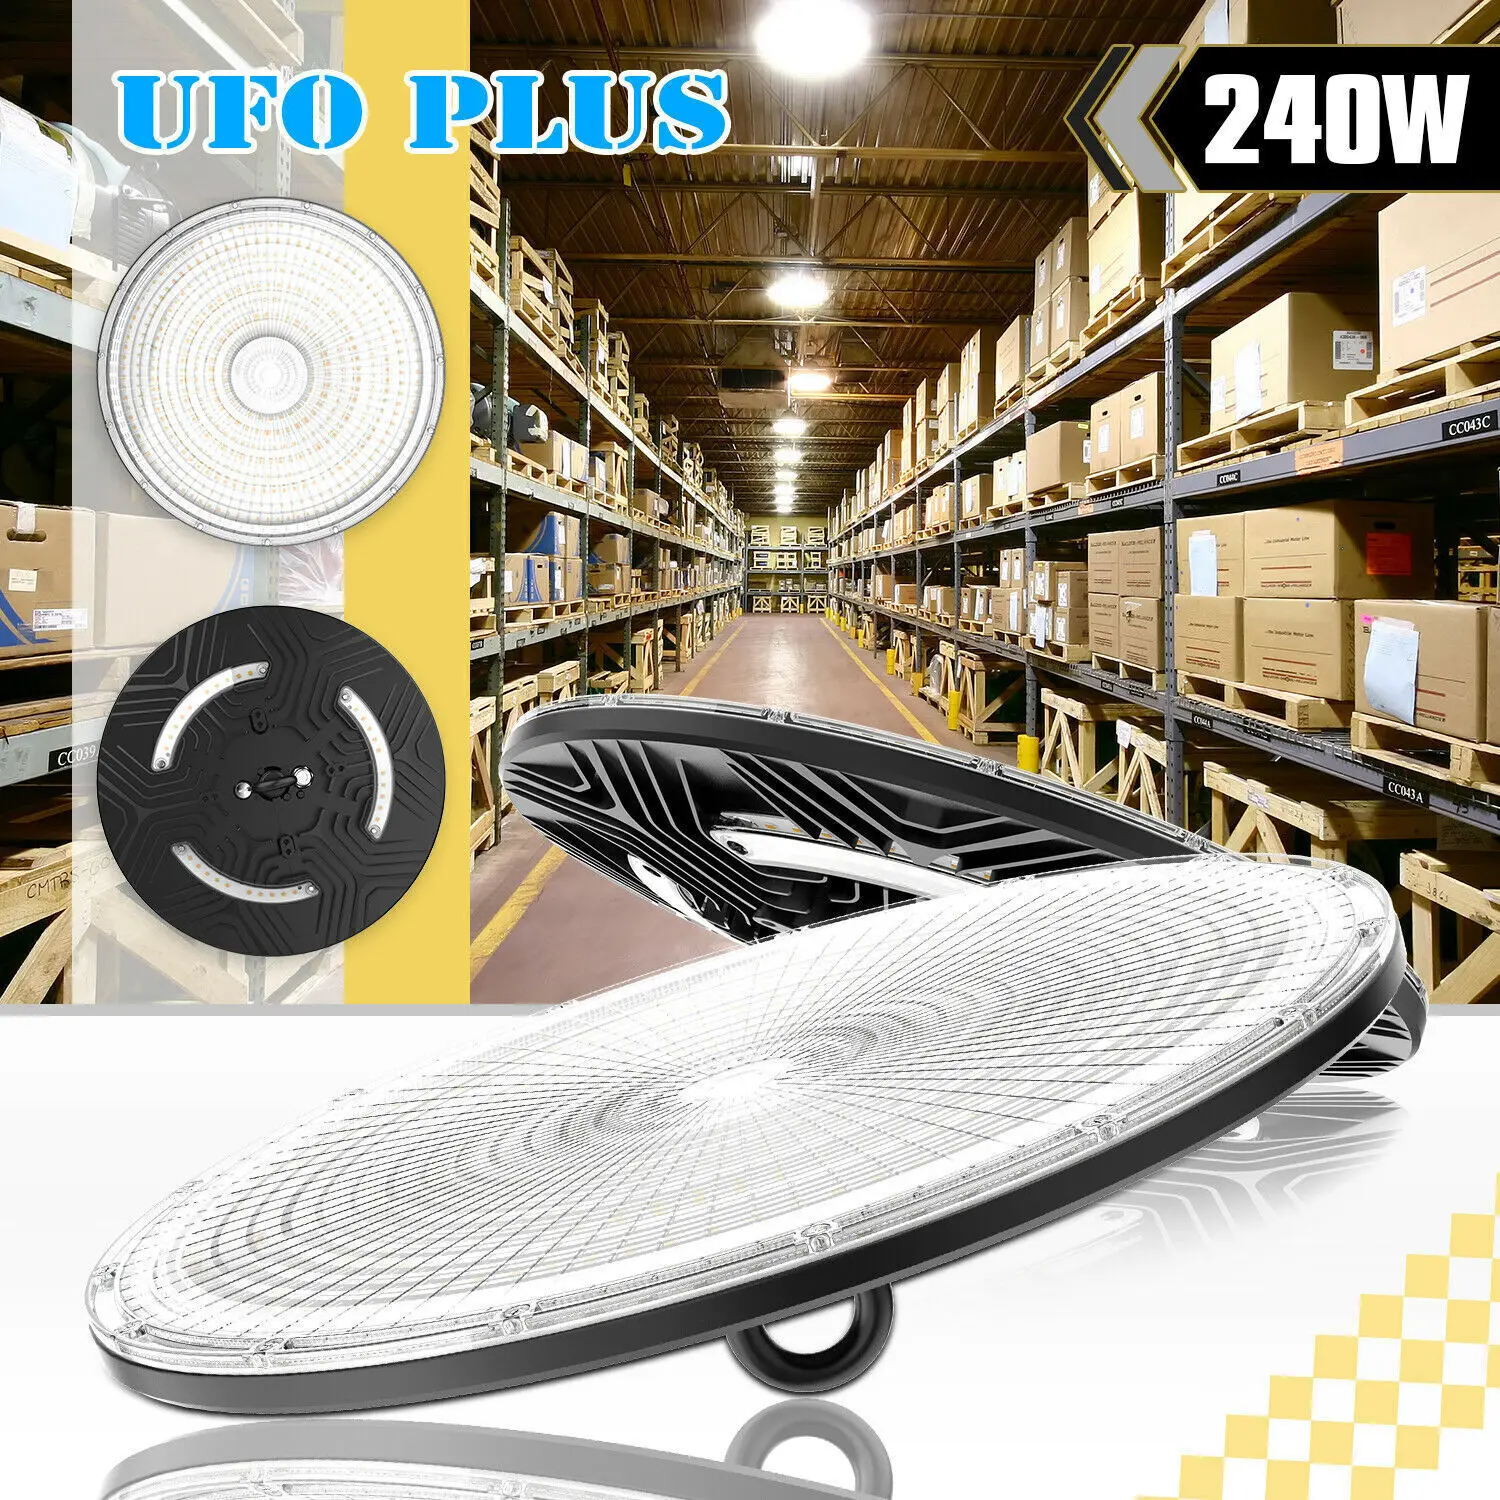 240W UFO LED High Bay Light 33600lm 5000K Daylight Eqv.1000W MH/HPS with 120V US Plug 5’ Cable LED Warehouse Light Area Lighting